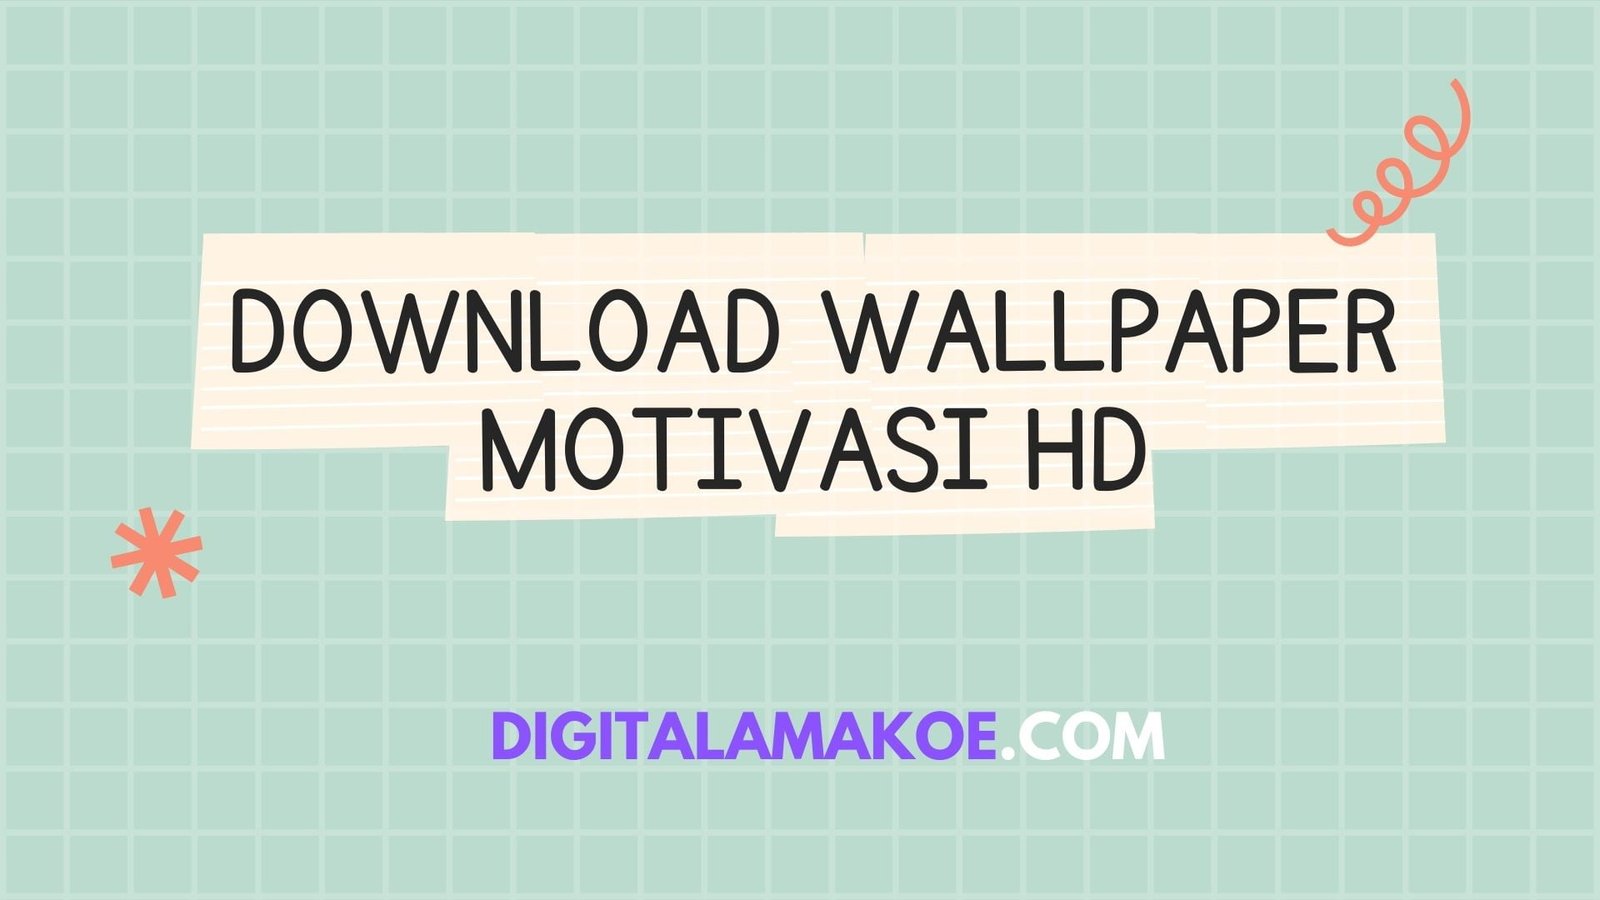 download wallpaper motivasi hd